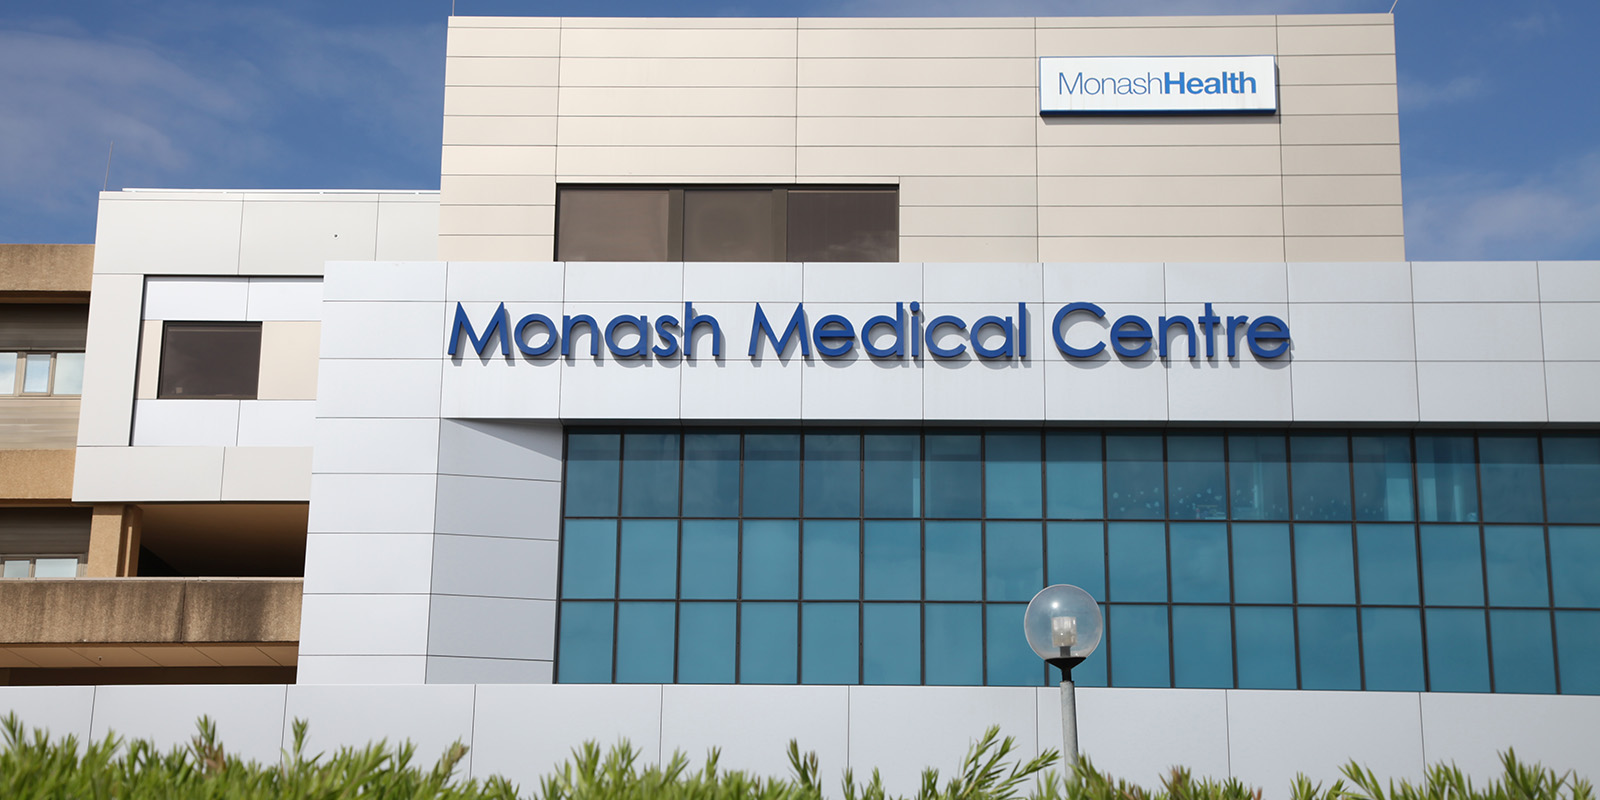 Contact Monash Health